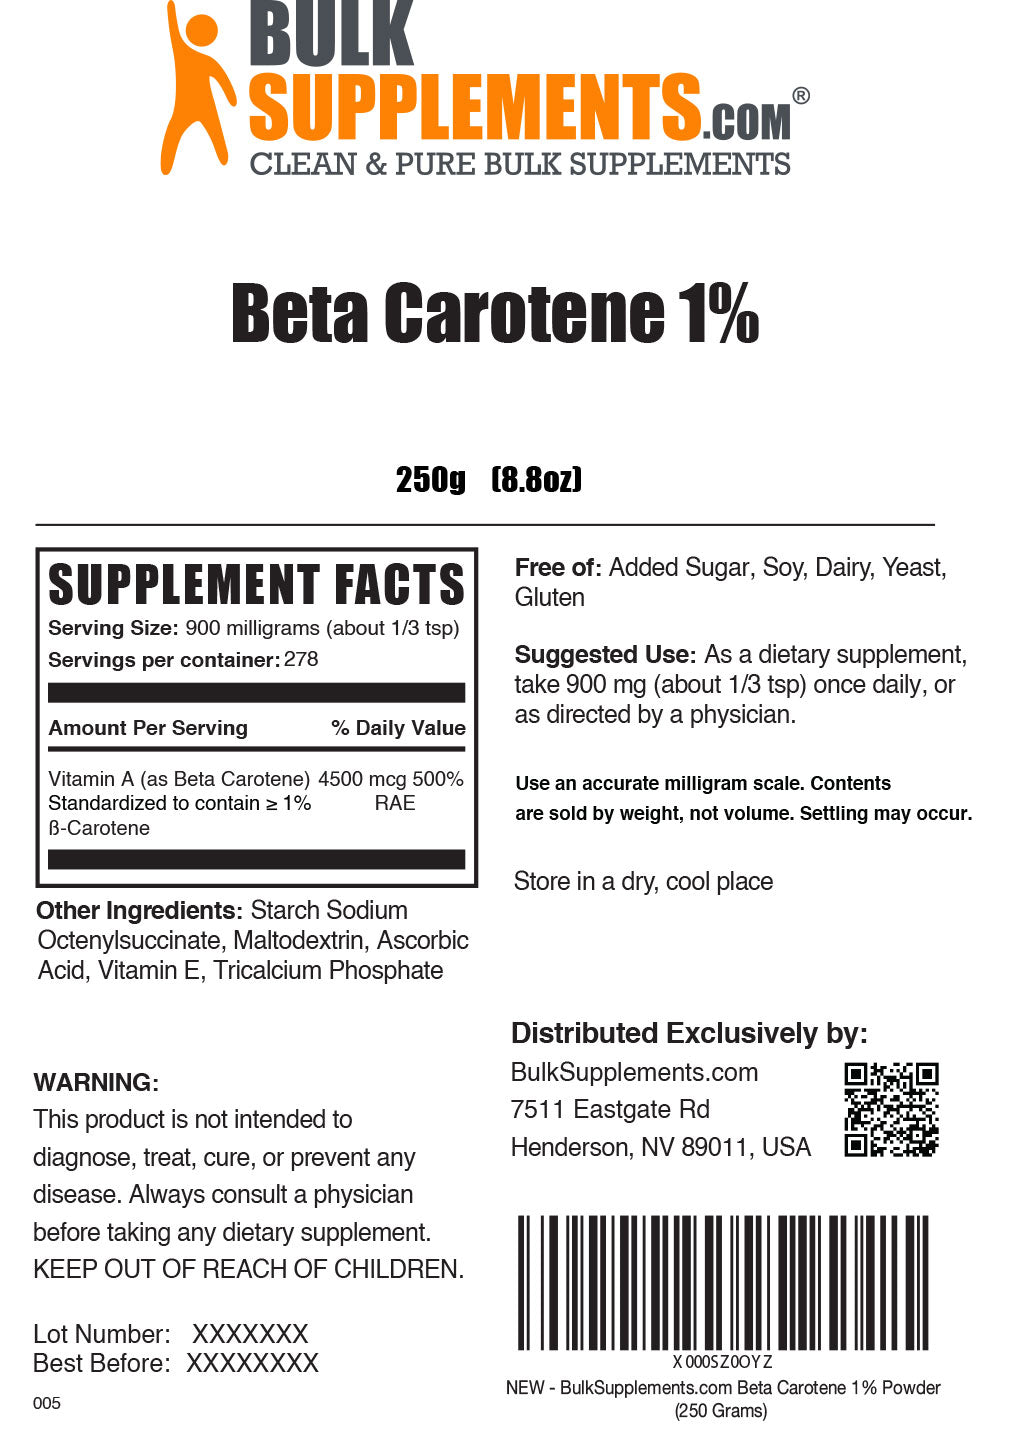 Beta Carotene 1% Powder